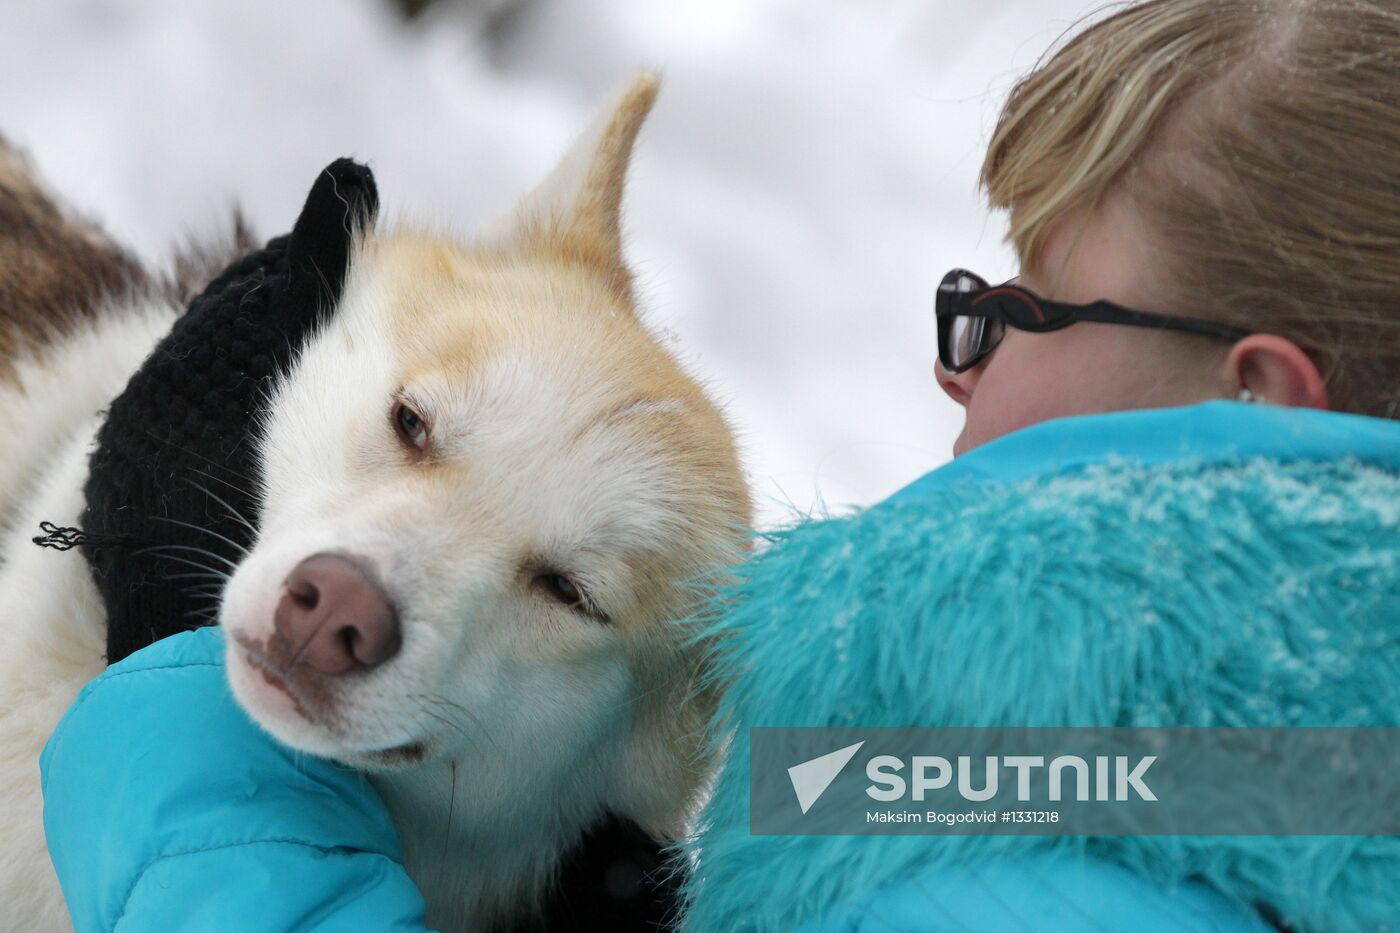 Altyn Chana 2013 sled dog races in Zelenodolsk